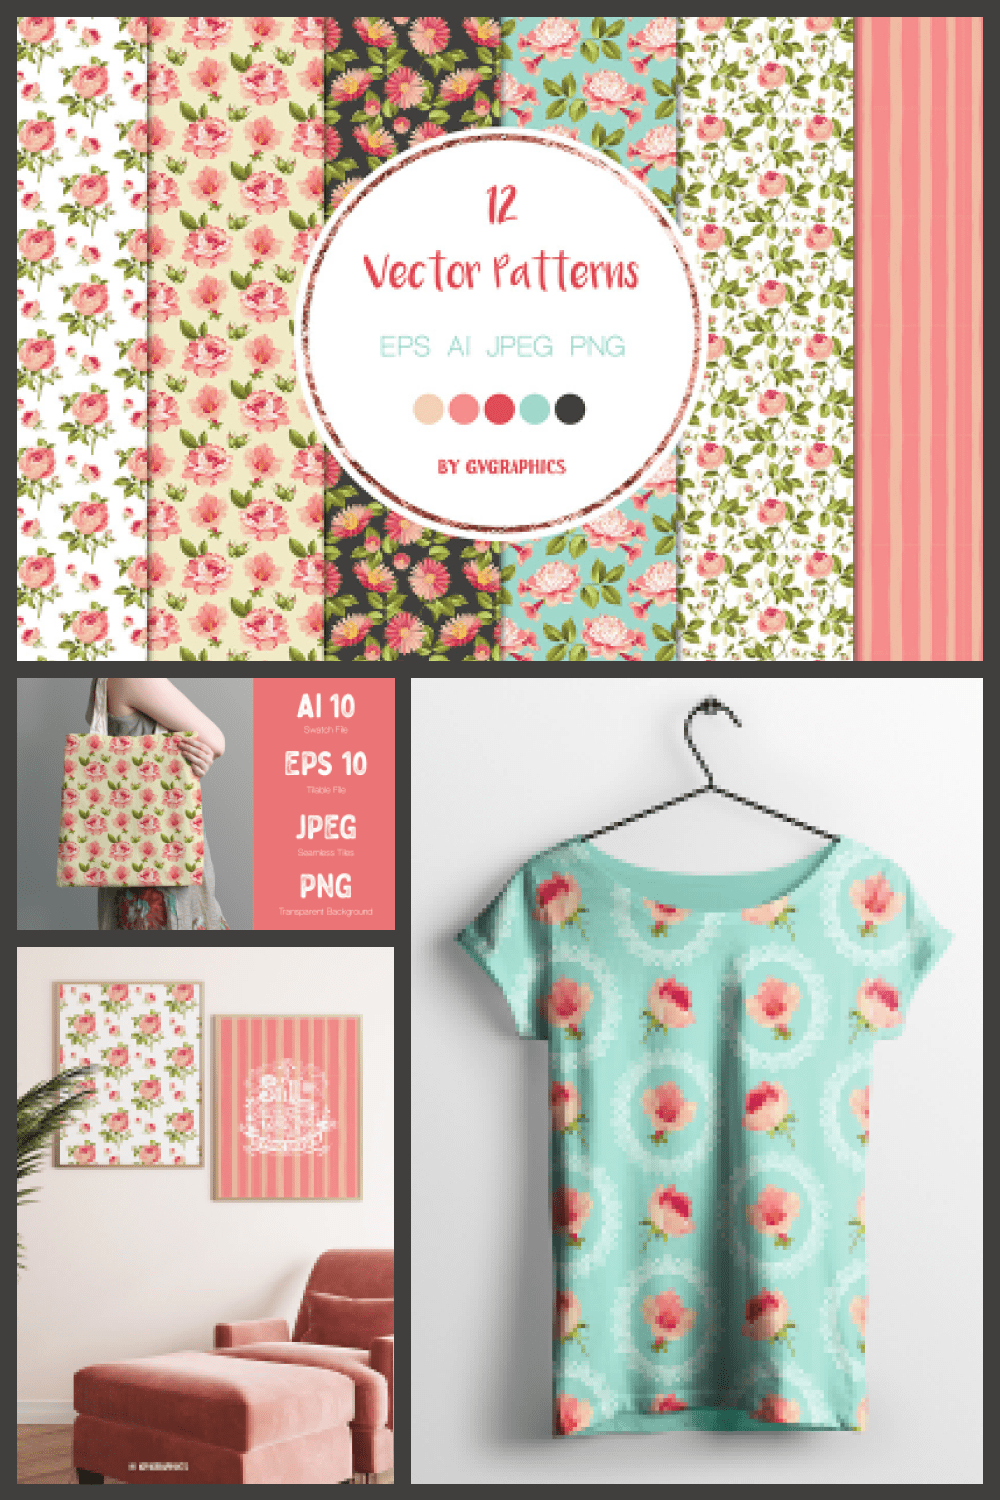 Elegant Pink Flowers Vector Seamless Patterns - MasterBundles - Pinterest Collage Image.